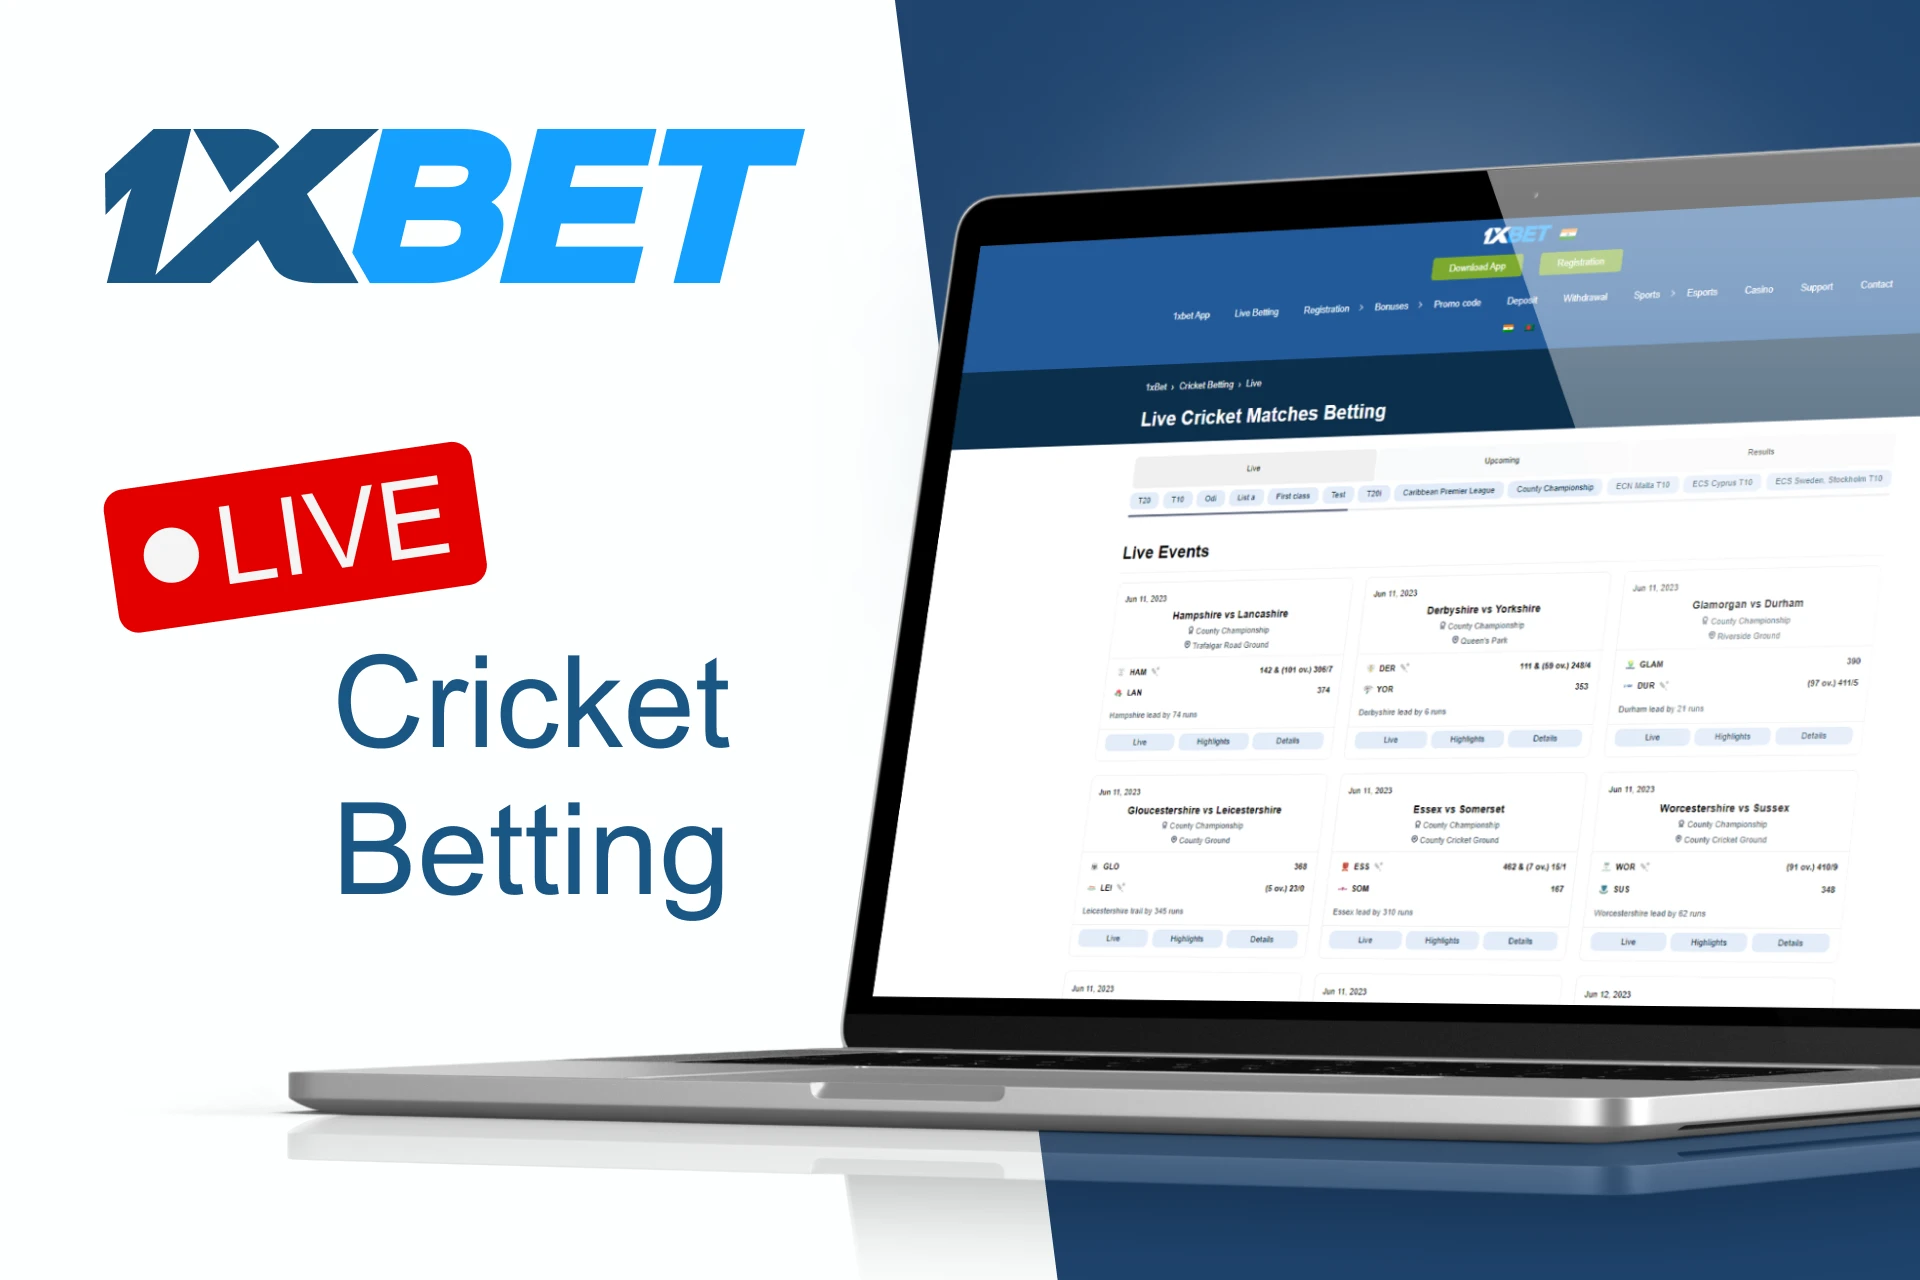 Start bettin on live cricket matches at 1xBet match center.